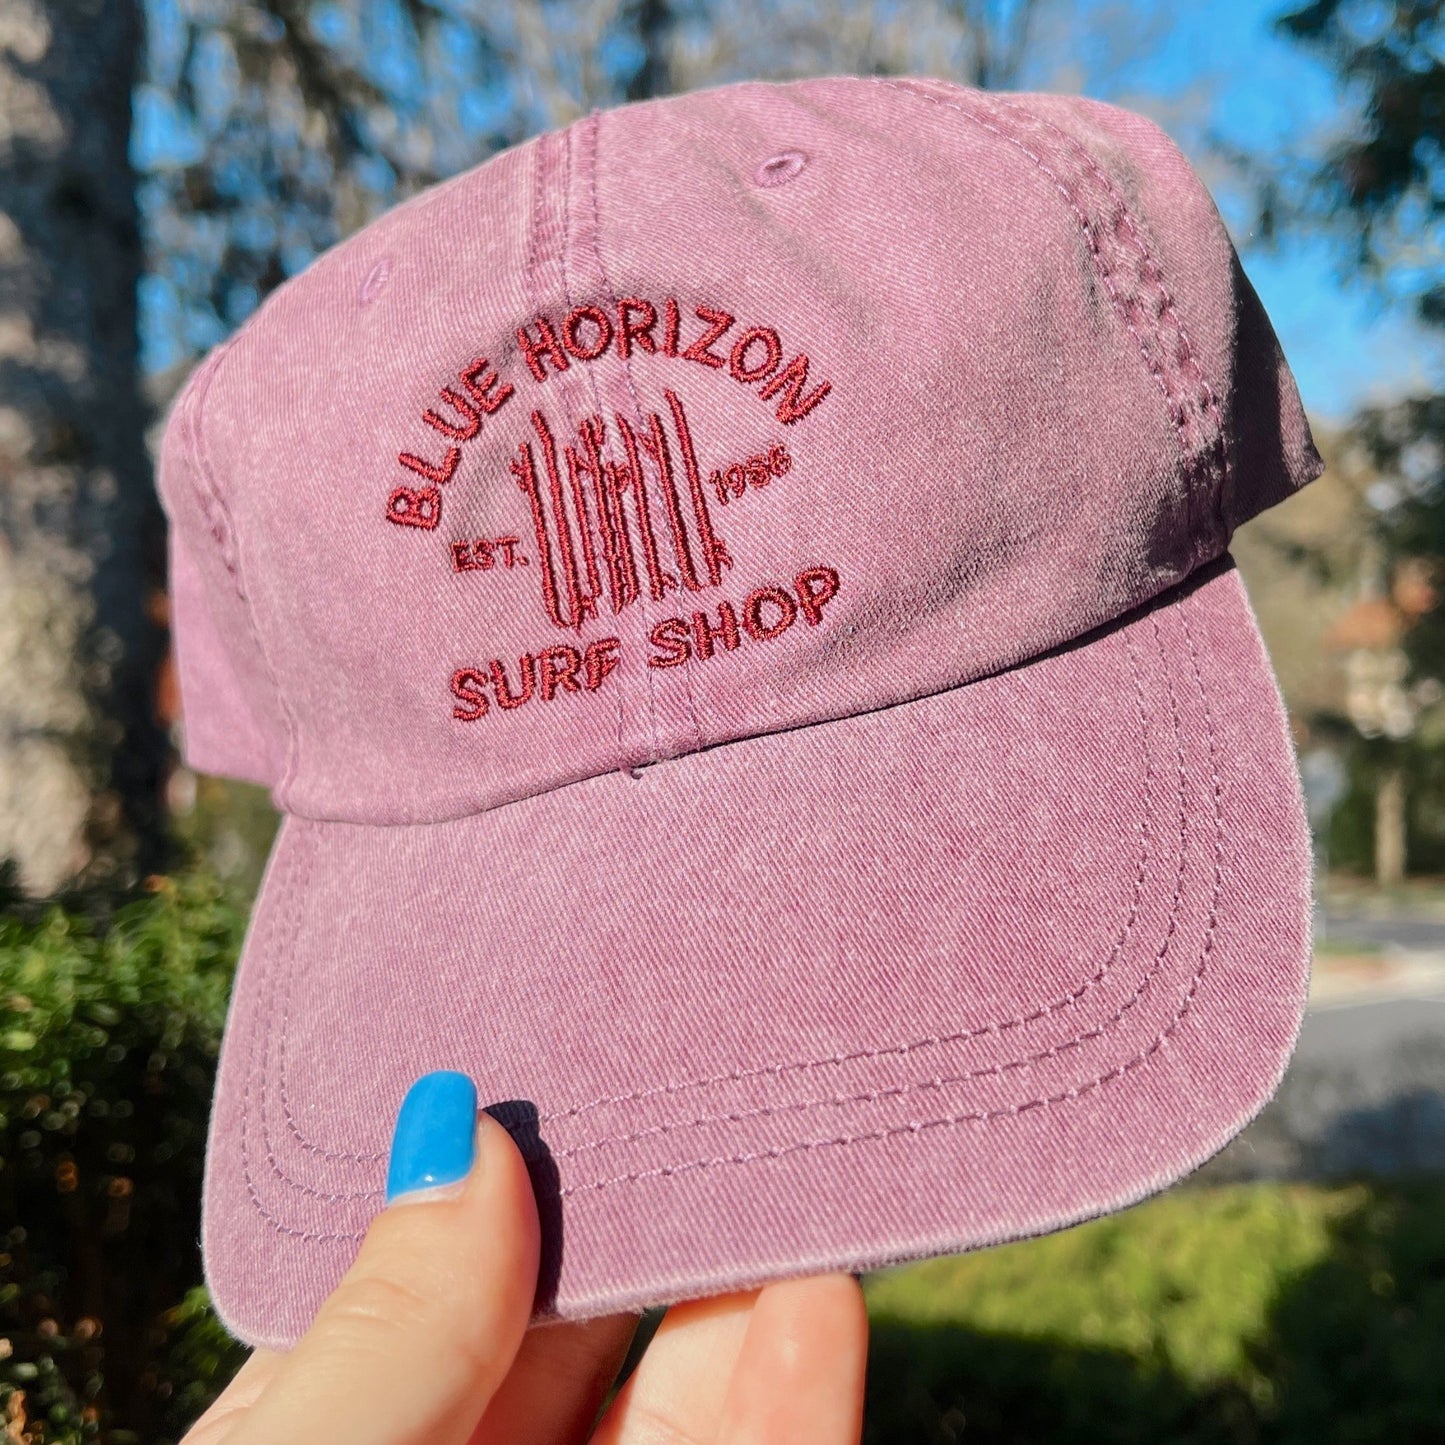 Blue Horizon Surf Shop Hat - Alex Blom Creates